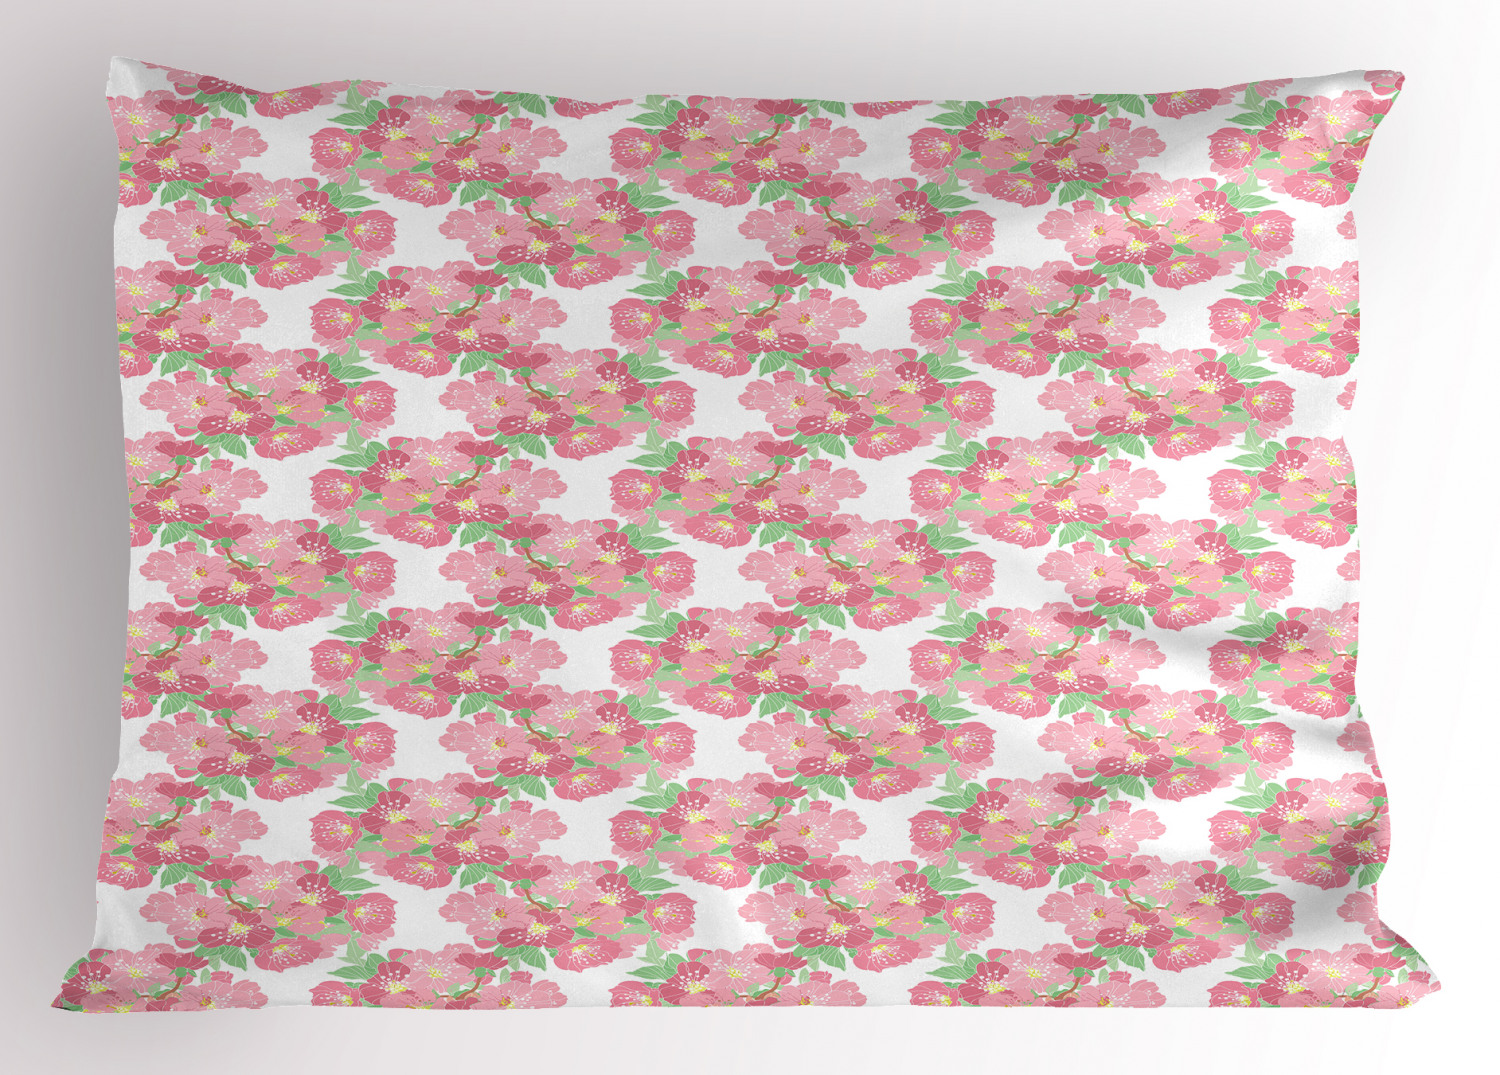 Details about   Japanese Dragon Pillow Sham Decorative Pillowcase 3 Sizes Bedroom Decoration 